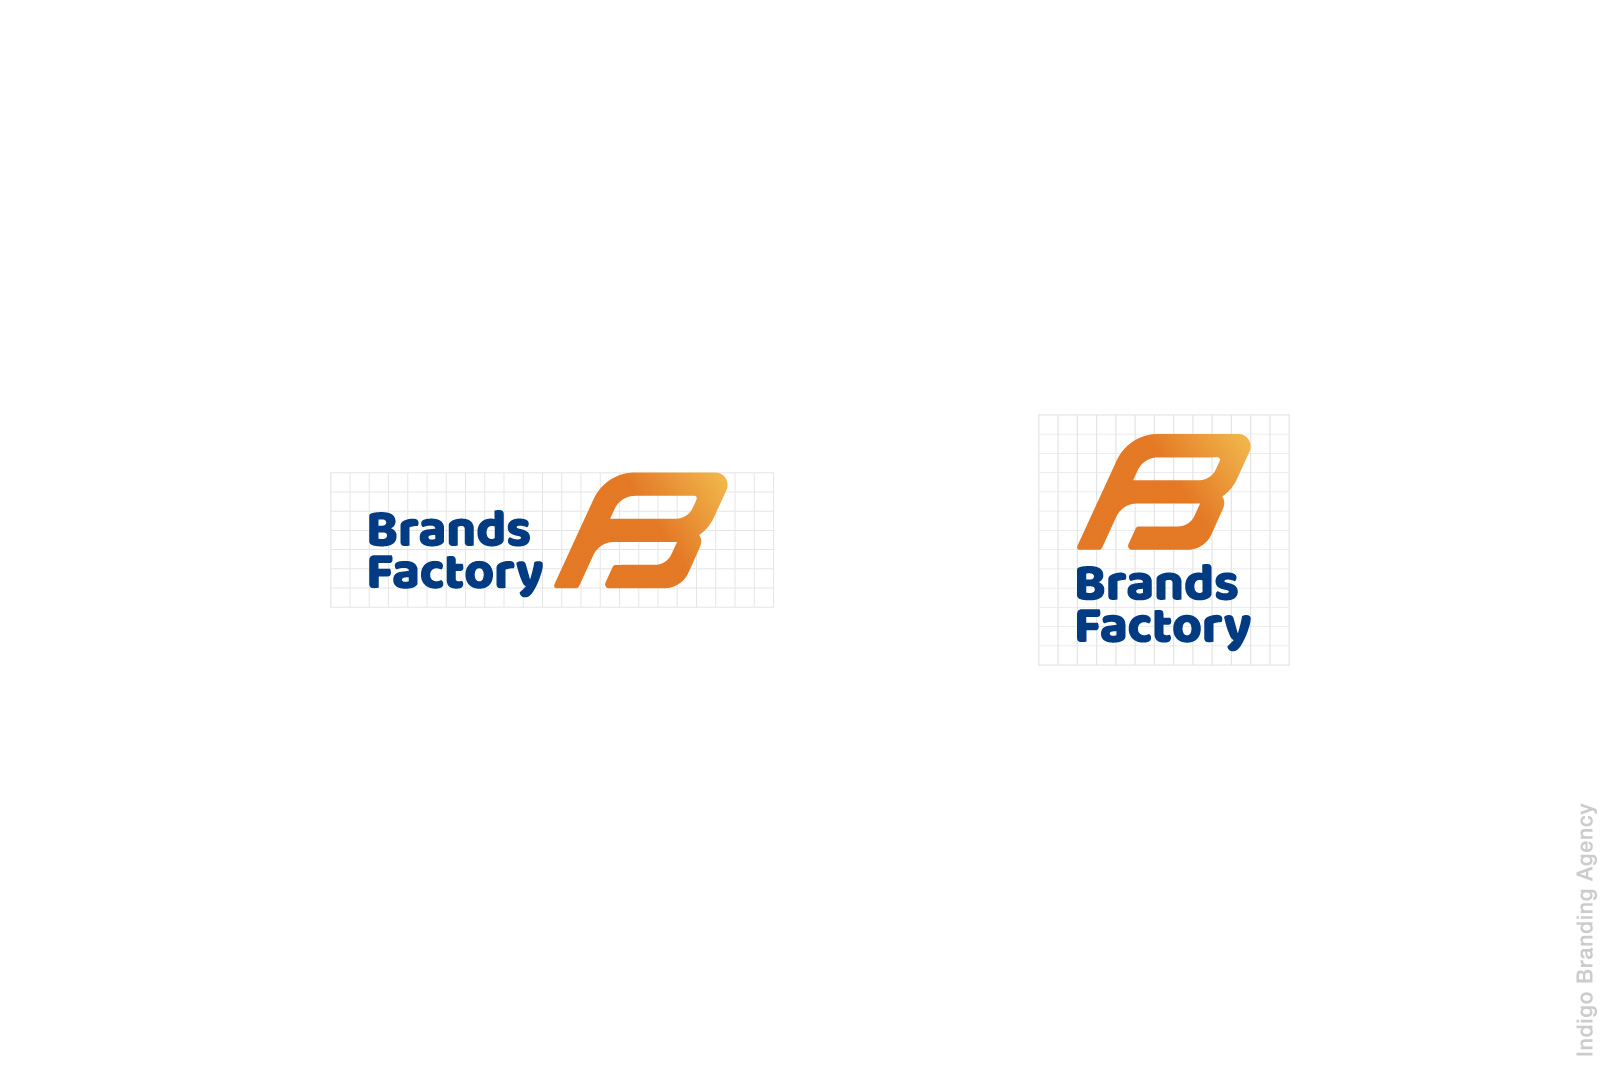 Brands Factory branding and logo in yerevan done by indigo branding